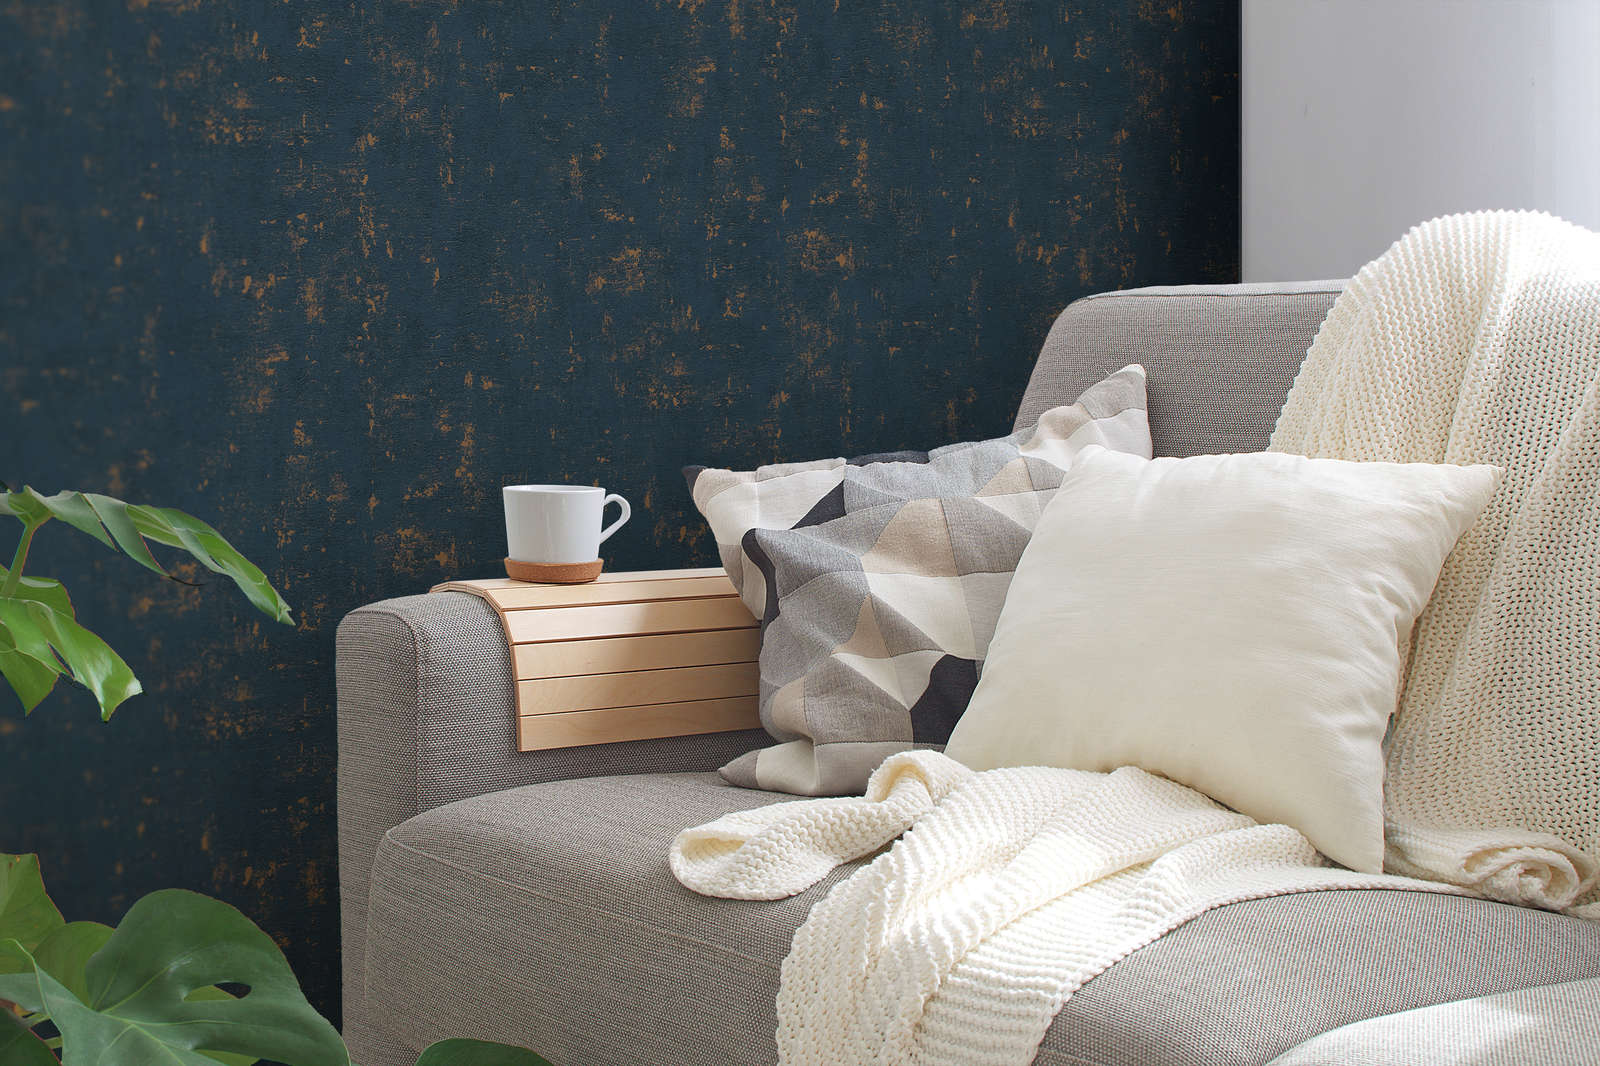             Bast pattern wallpaper with metallic effects - dark blue, gold
        